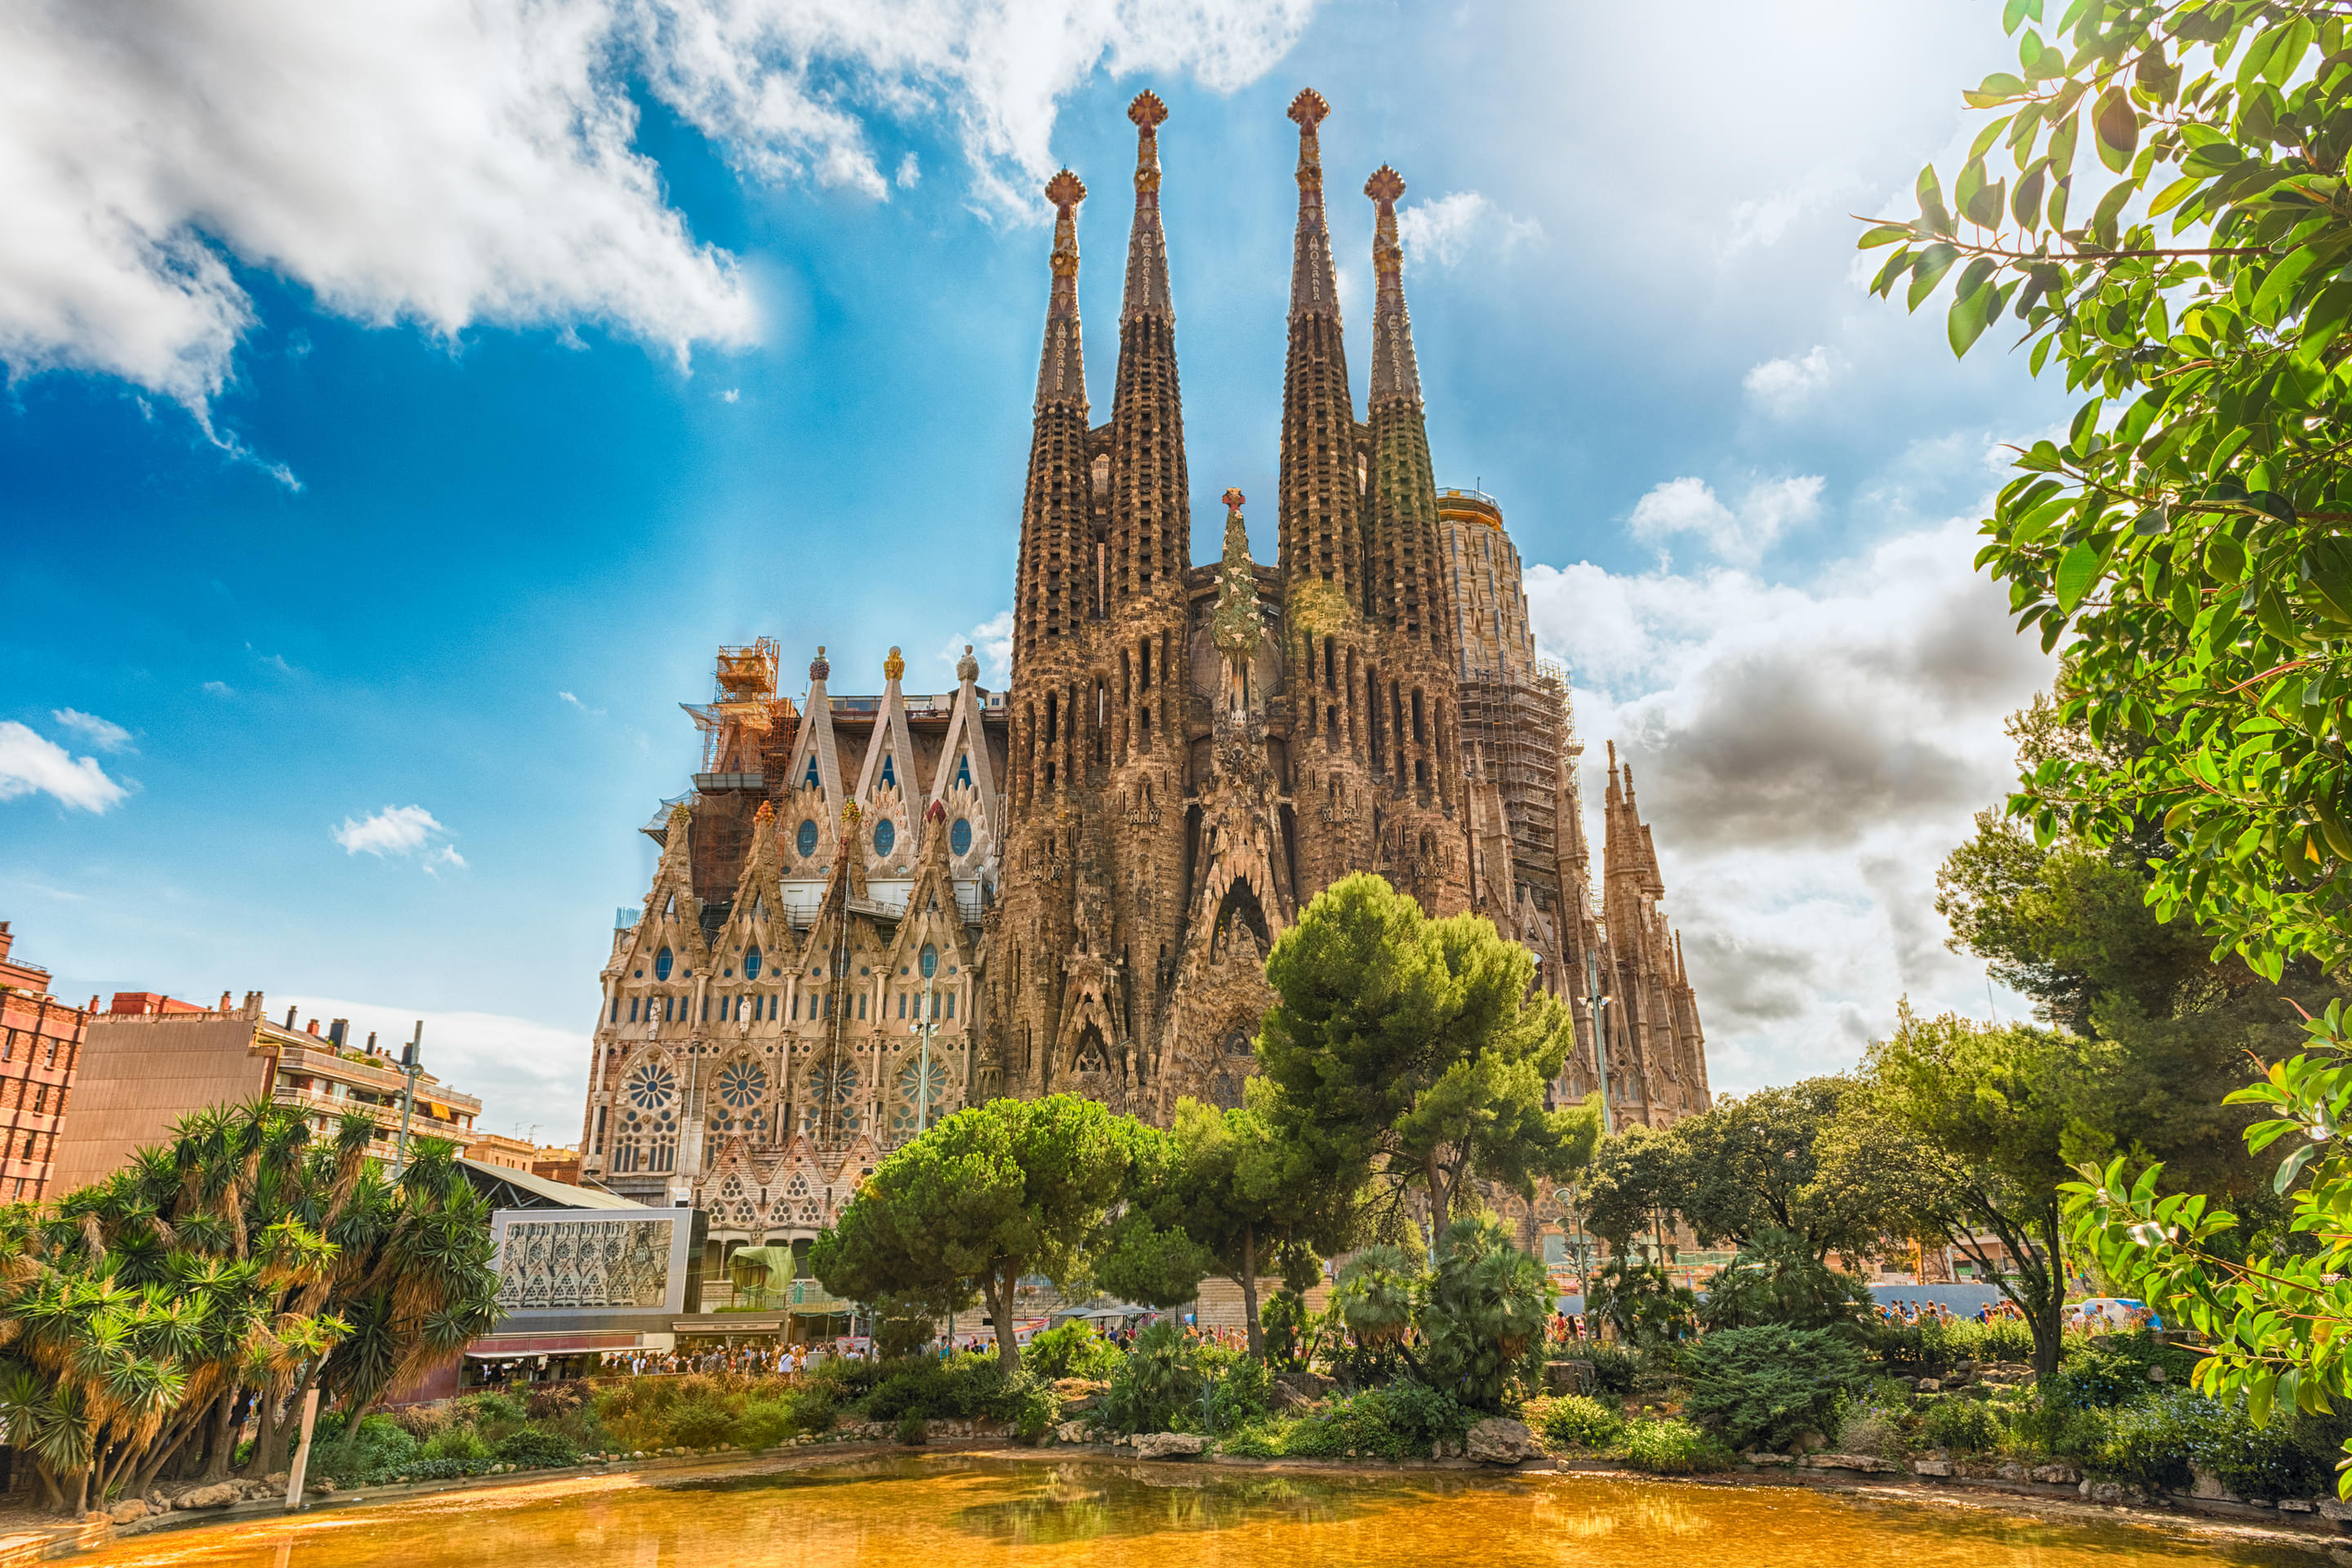 La Sagrada Familia Overview